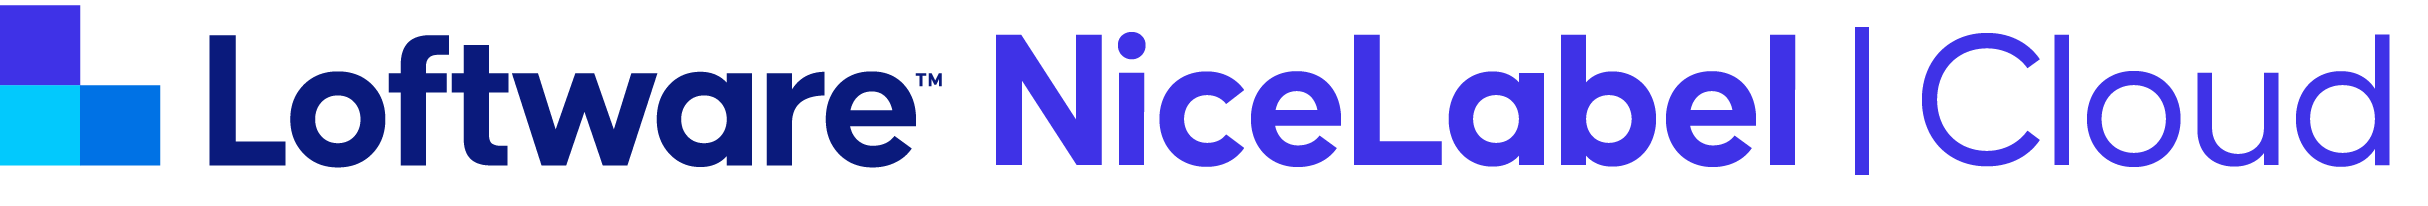 loftware nicelabel logo